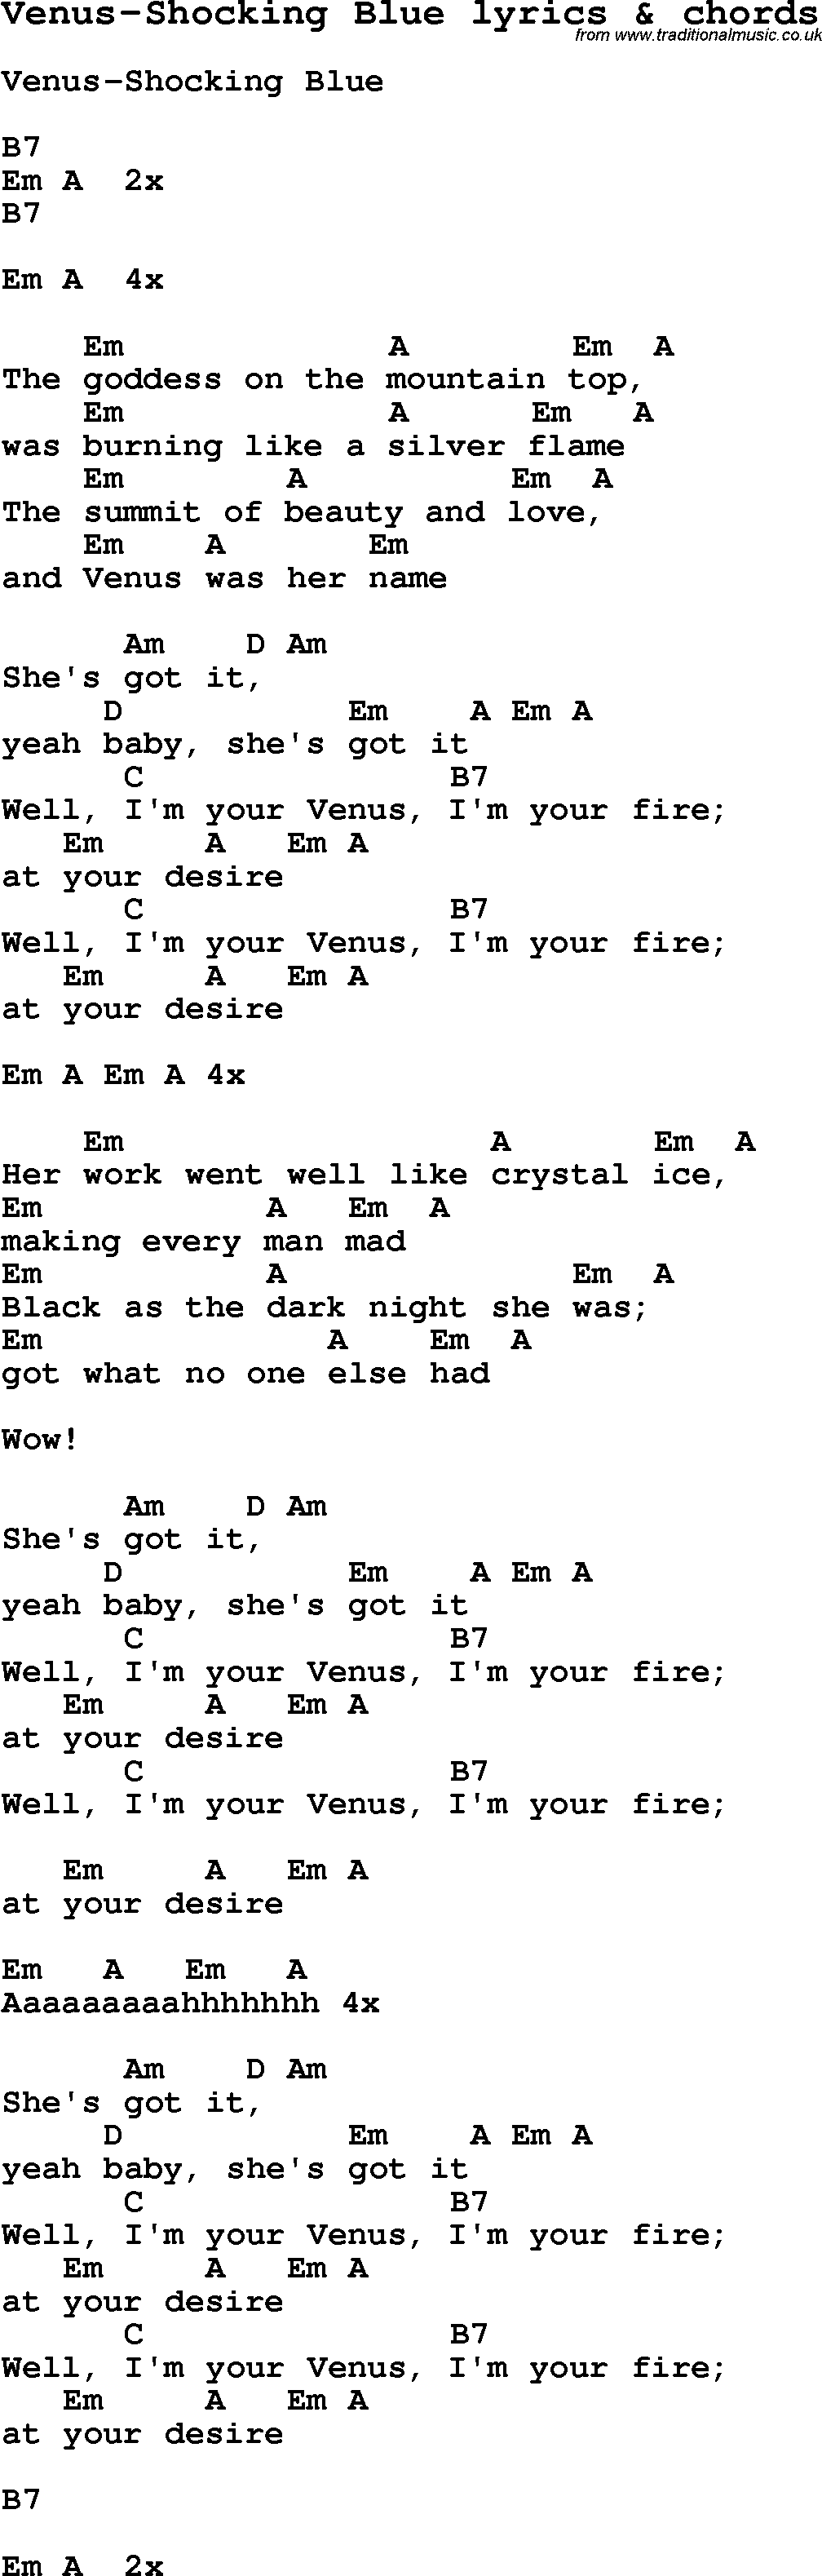 Love Song Lyrics for: Venus-Shocking Blue with chords for Ukulele, Guitar Banjo etc.